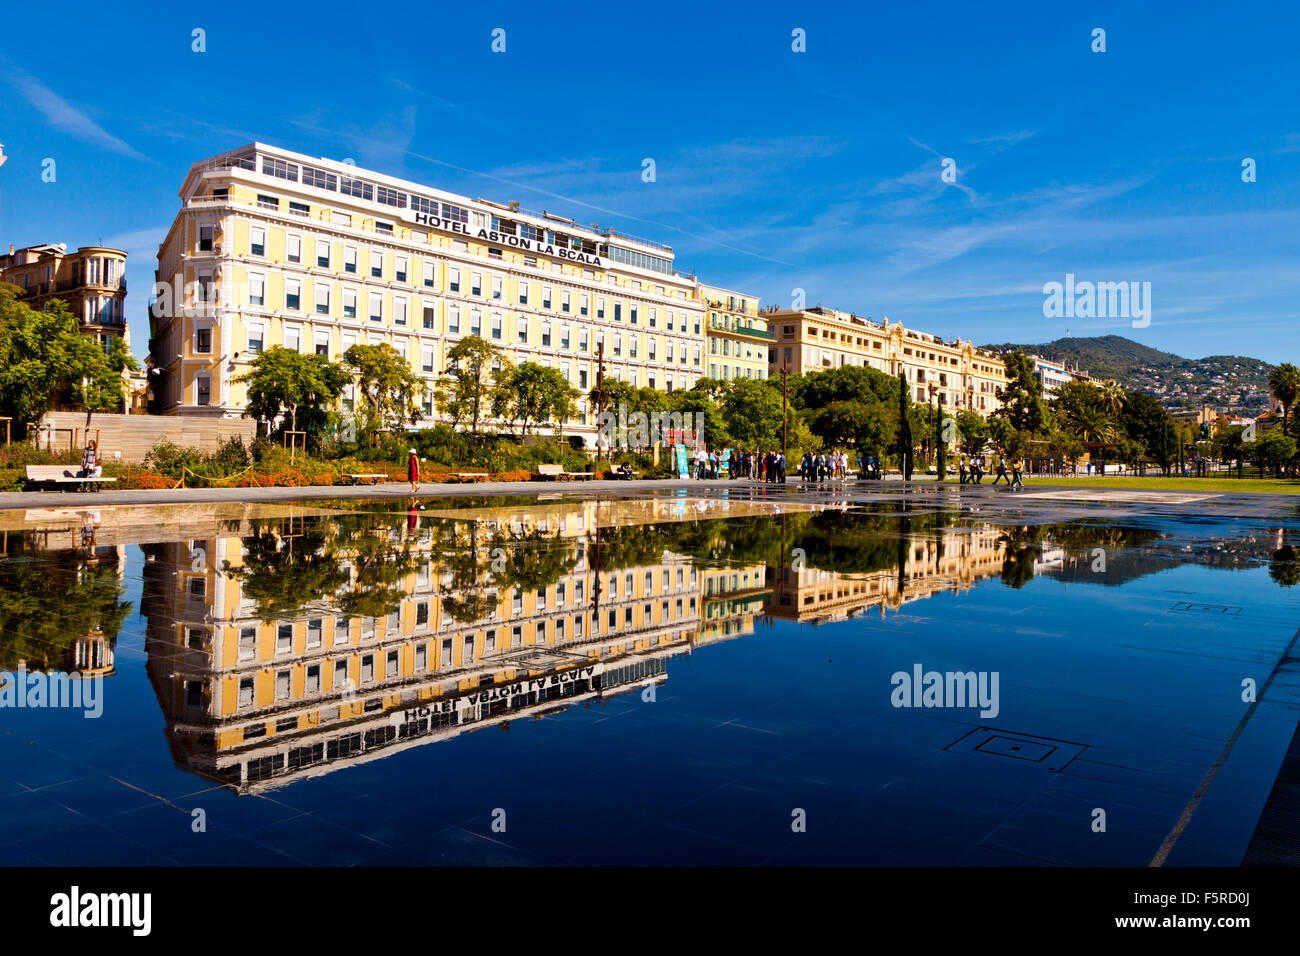 Hotel Aston La Scala reflected in the Miroir d'eau Nice France Stock Photo